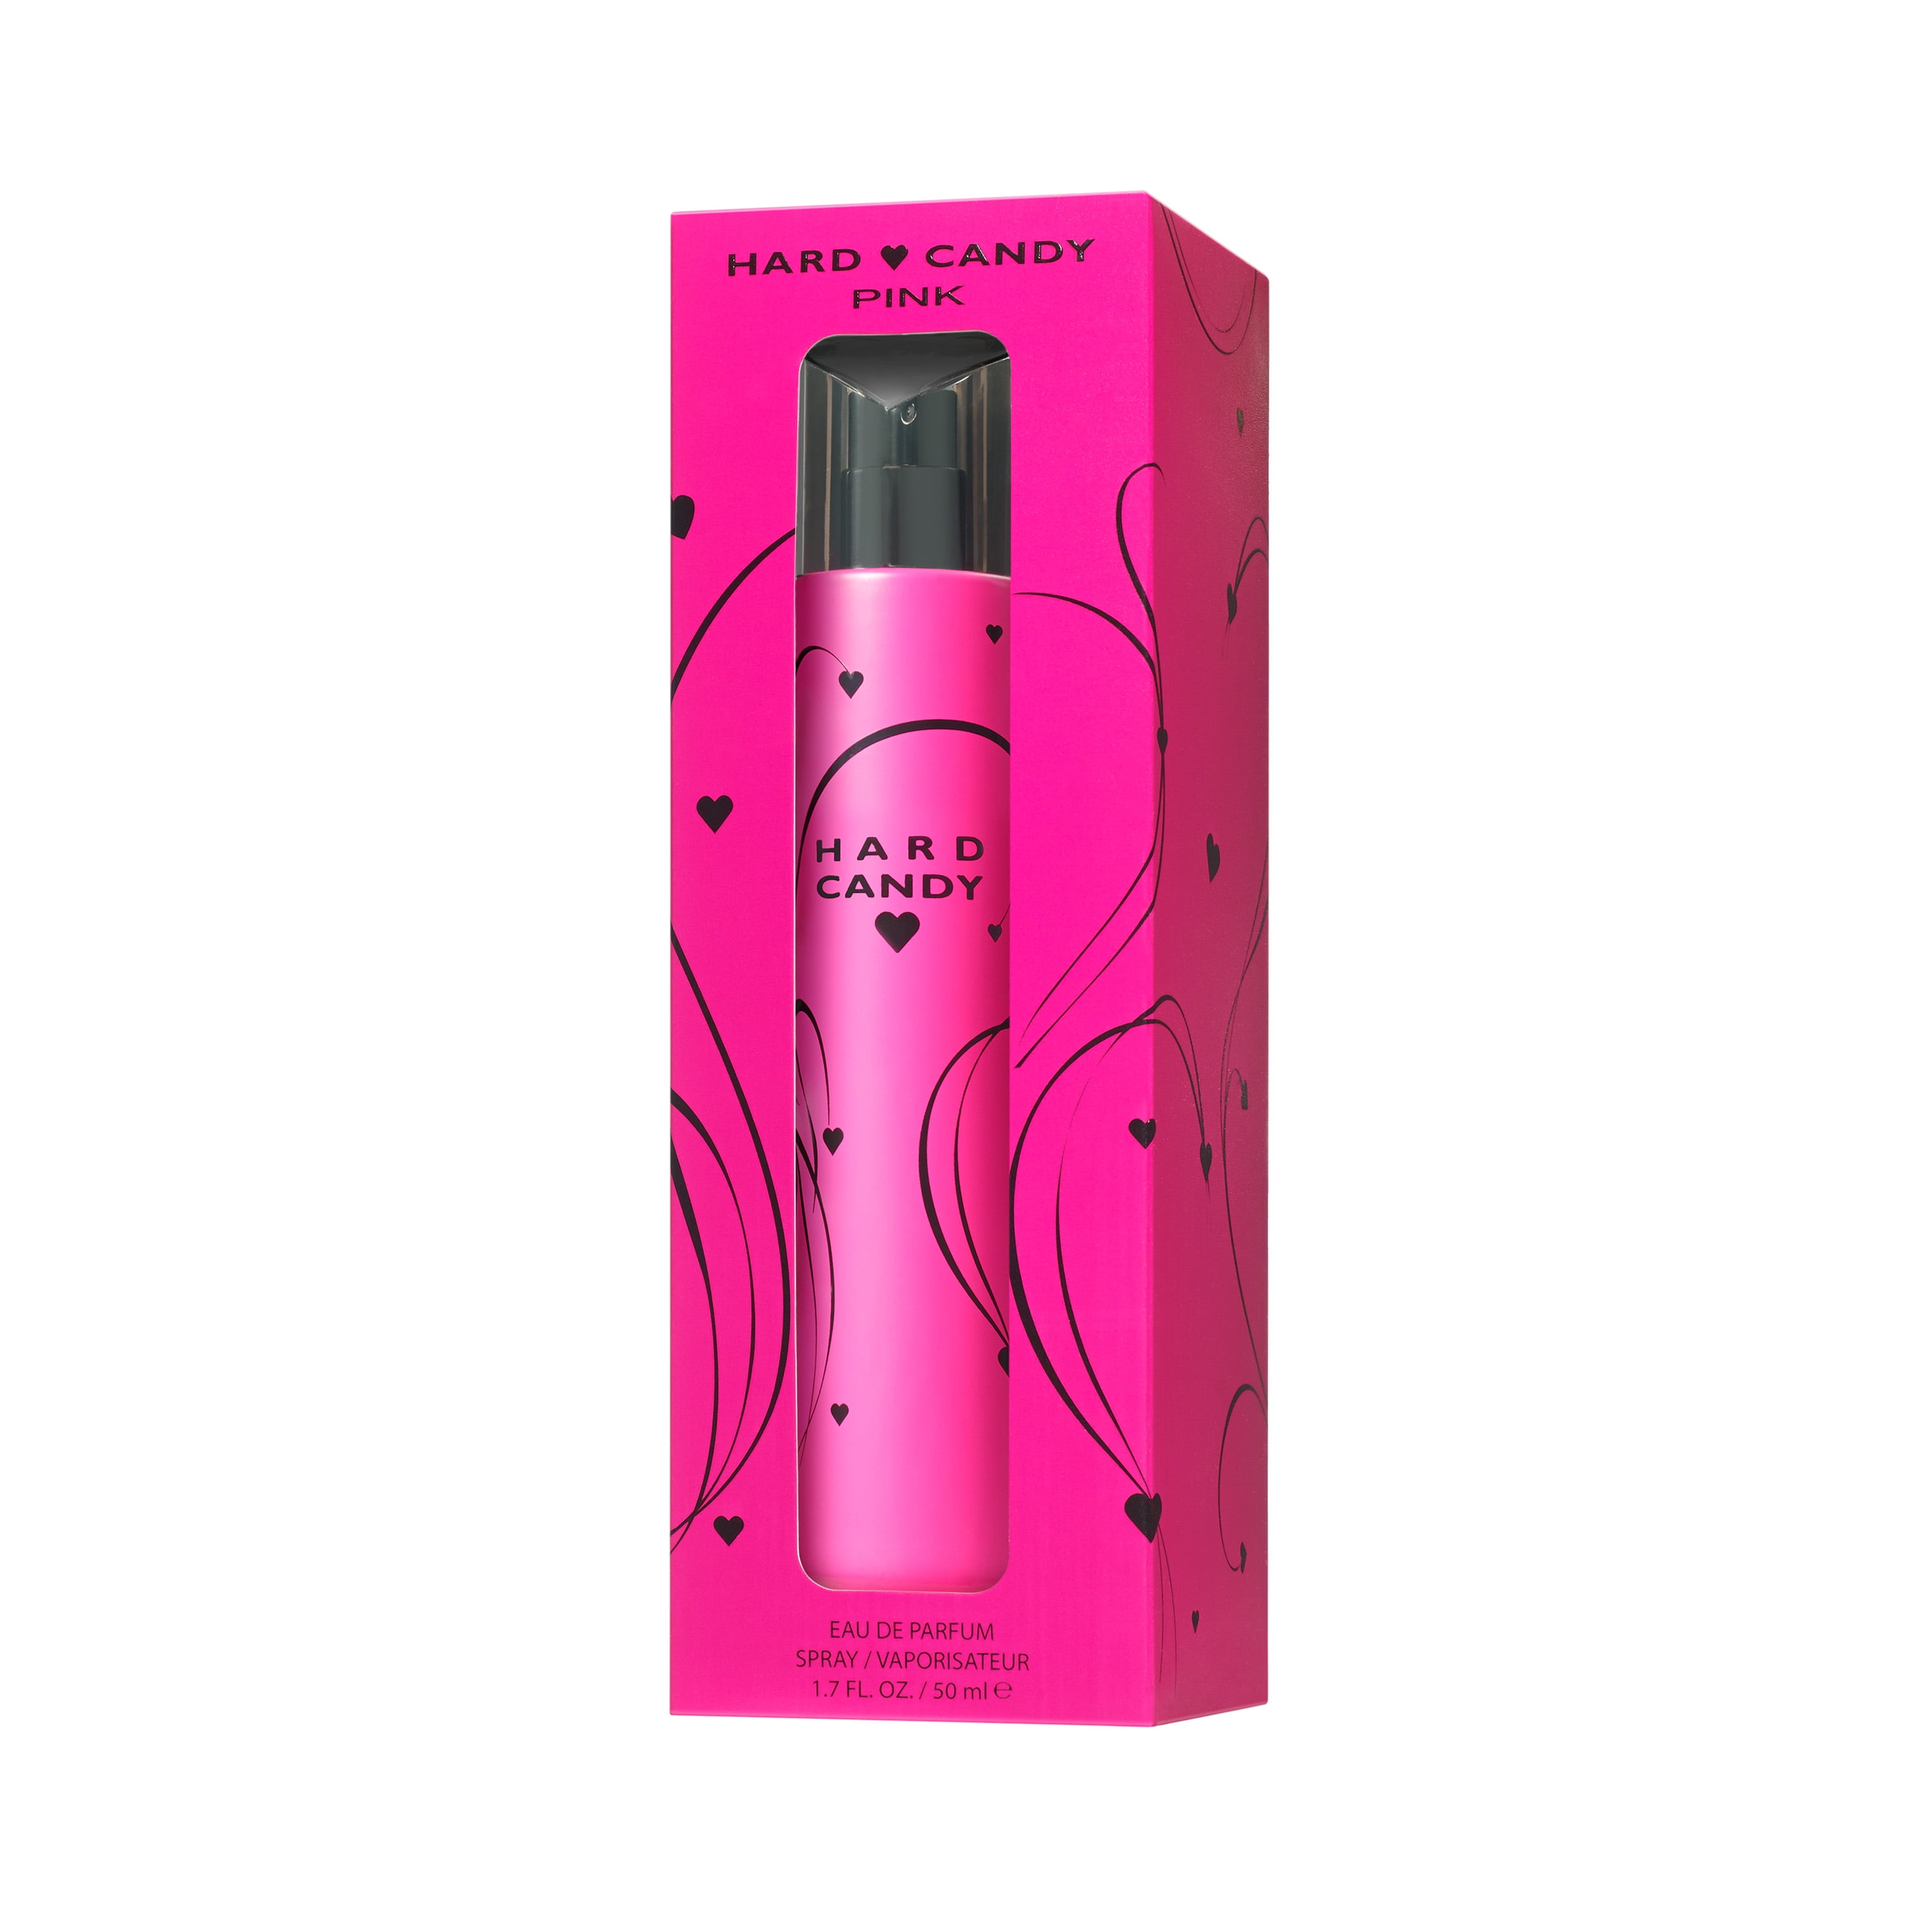 Hard Candy Pink Eau de Parfum, Perfume 